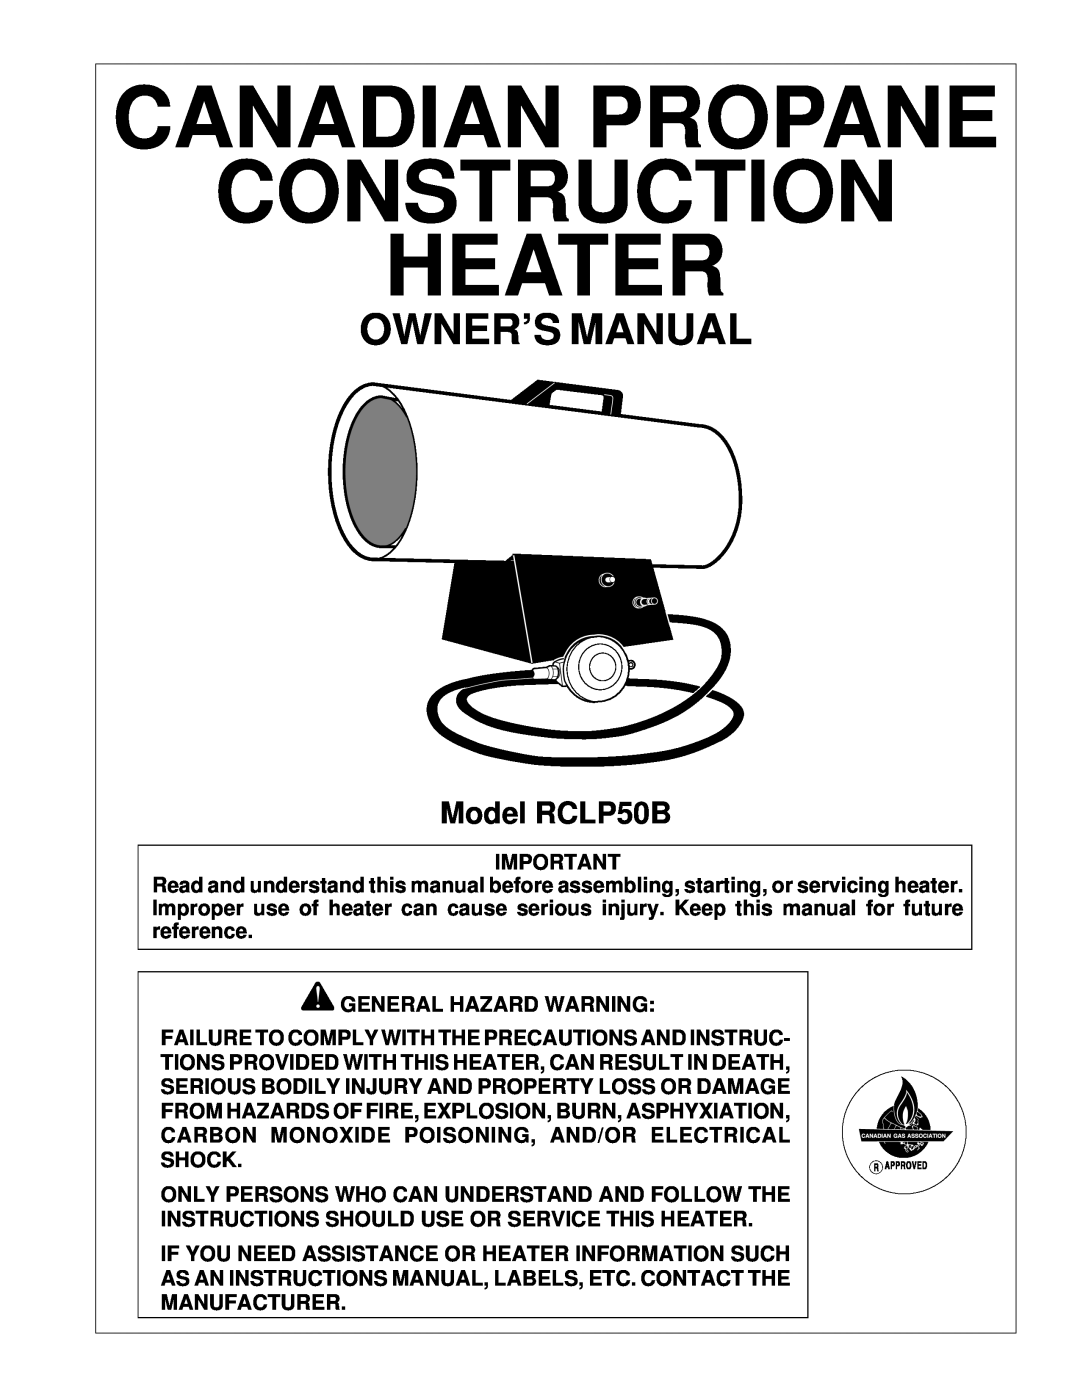 Desa owner manual Model RCLP50B, Canadian Propane Construction Heater 